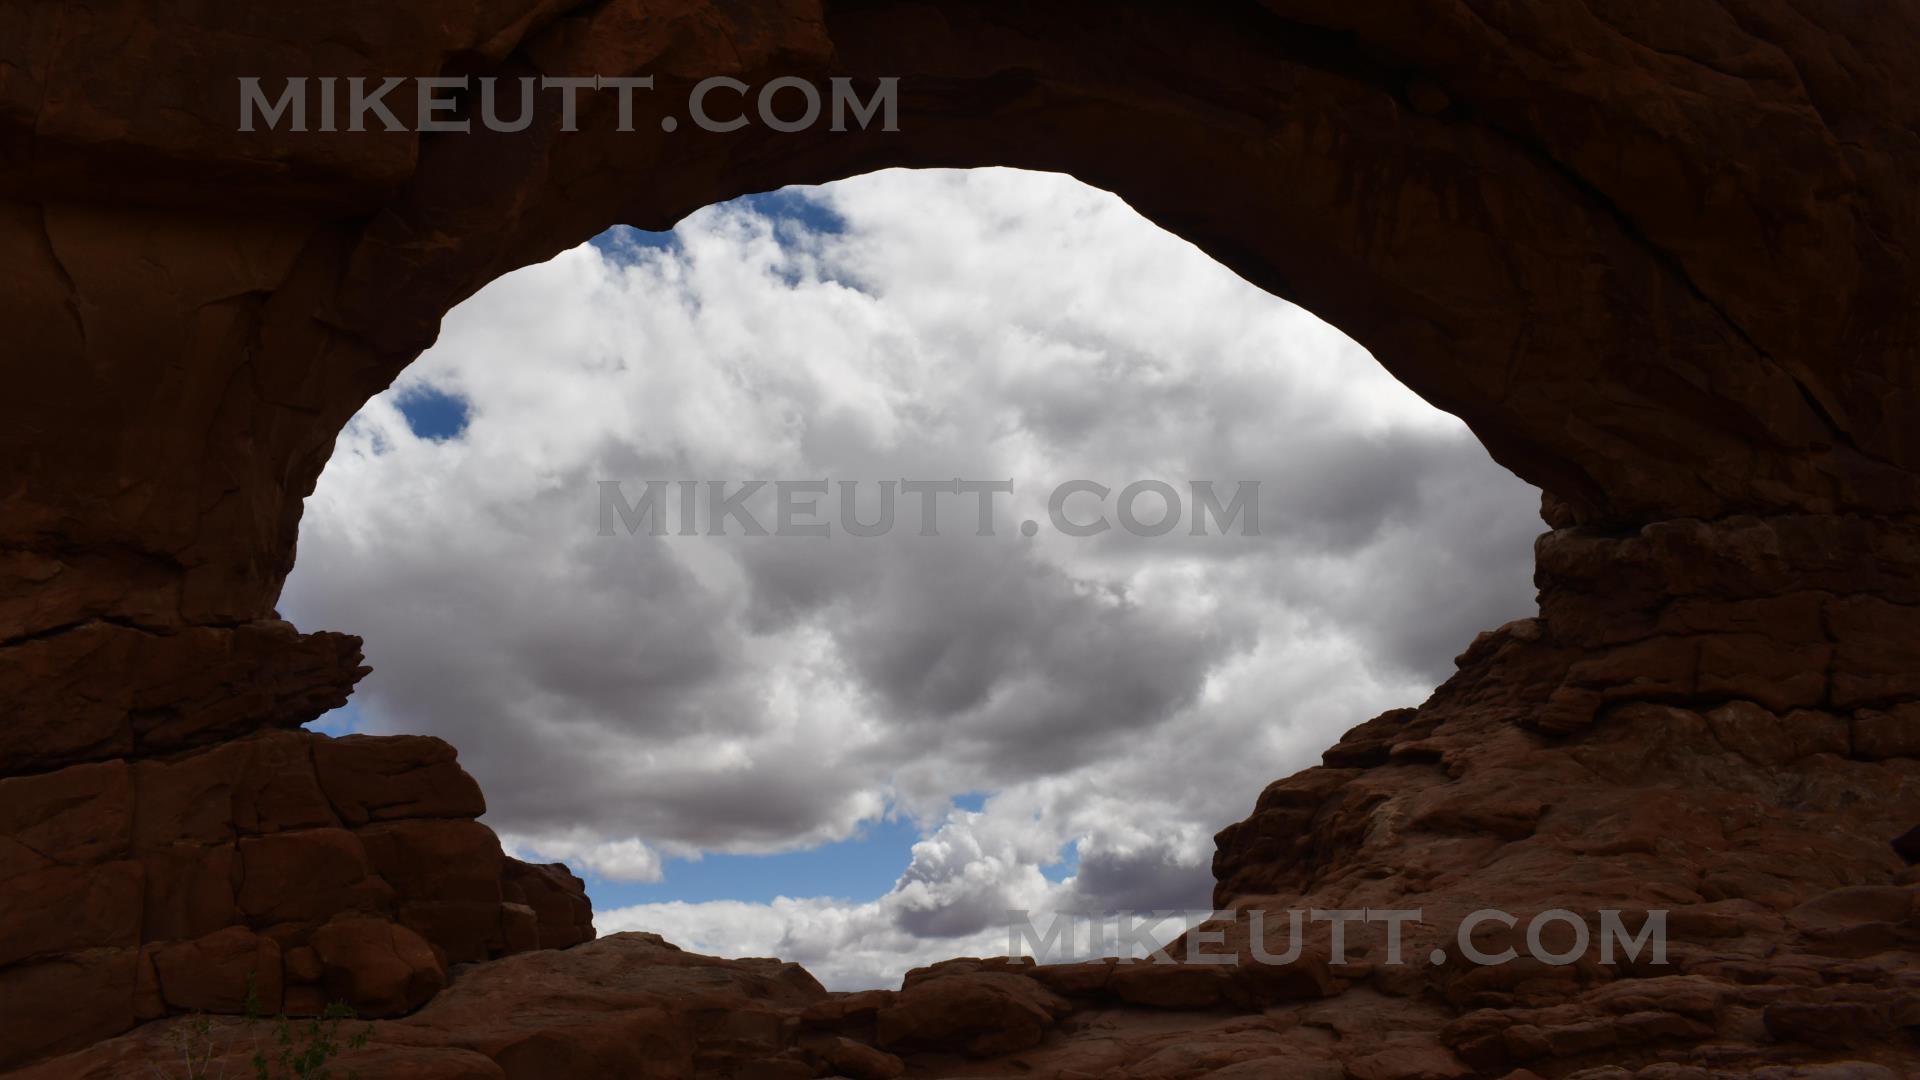 Arches National Park, UT - Windows 1